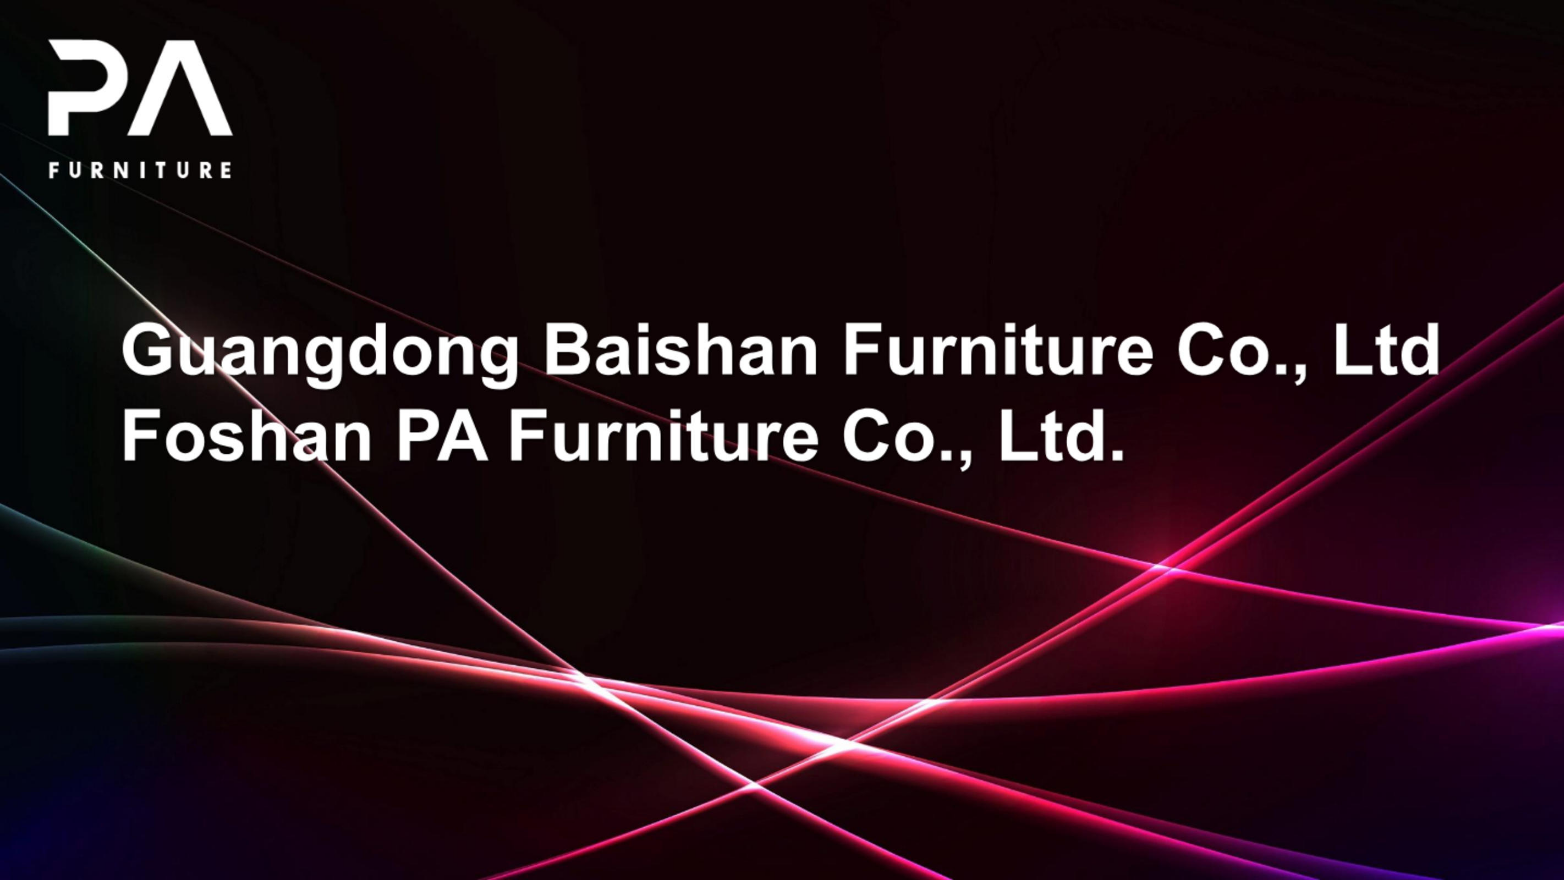 Guangdong Baishan Furniture (PA Furniture) 2018